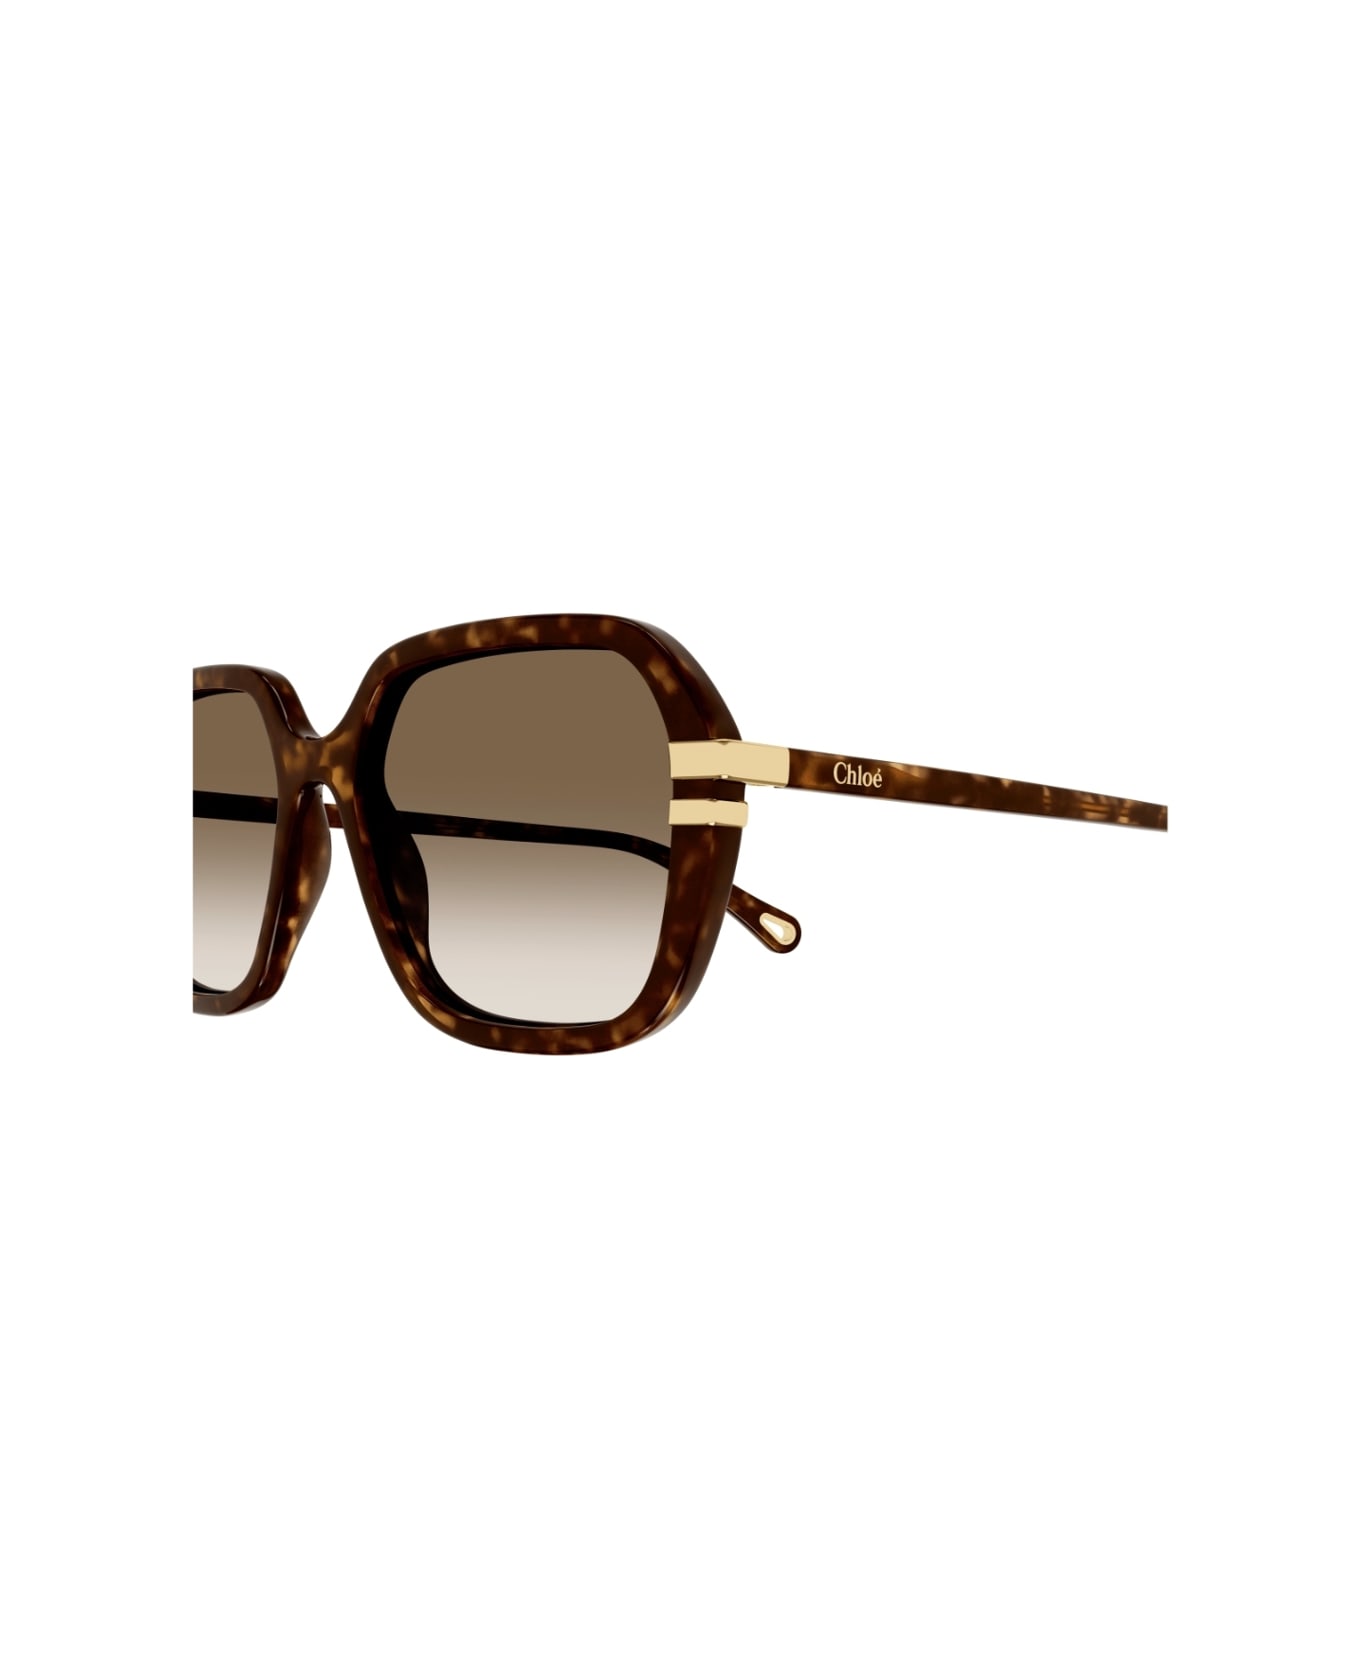 Chloé Eyewear CH0204s 002 Sunglasses